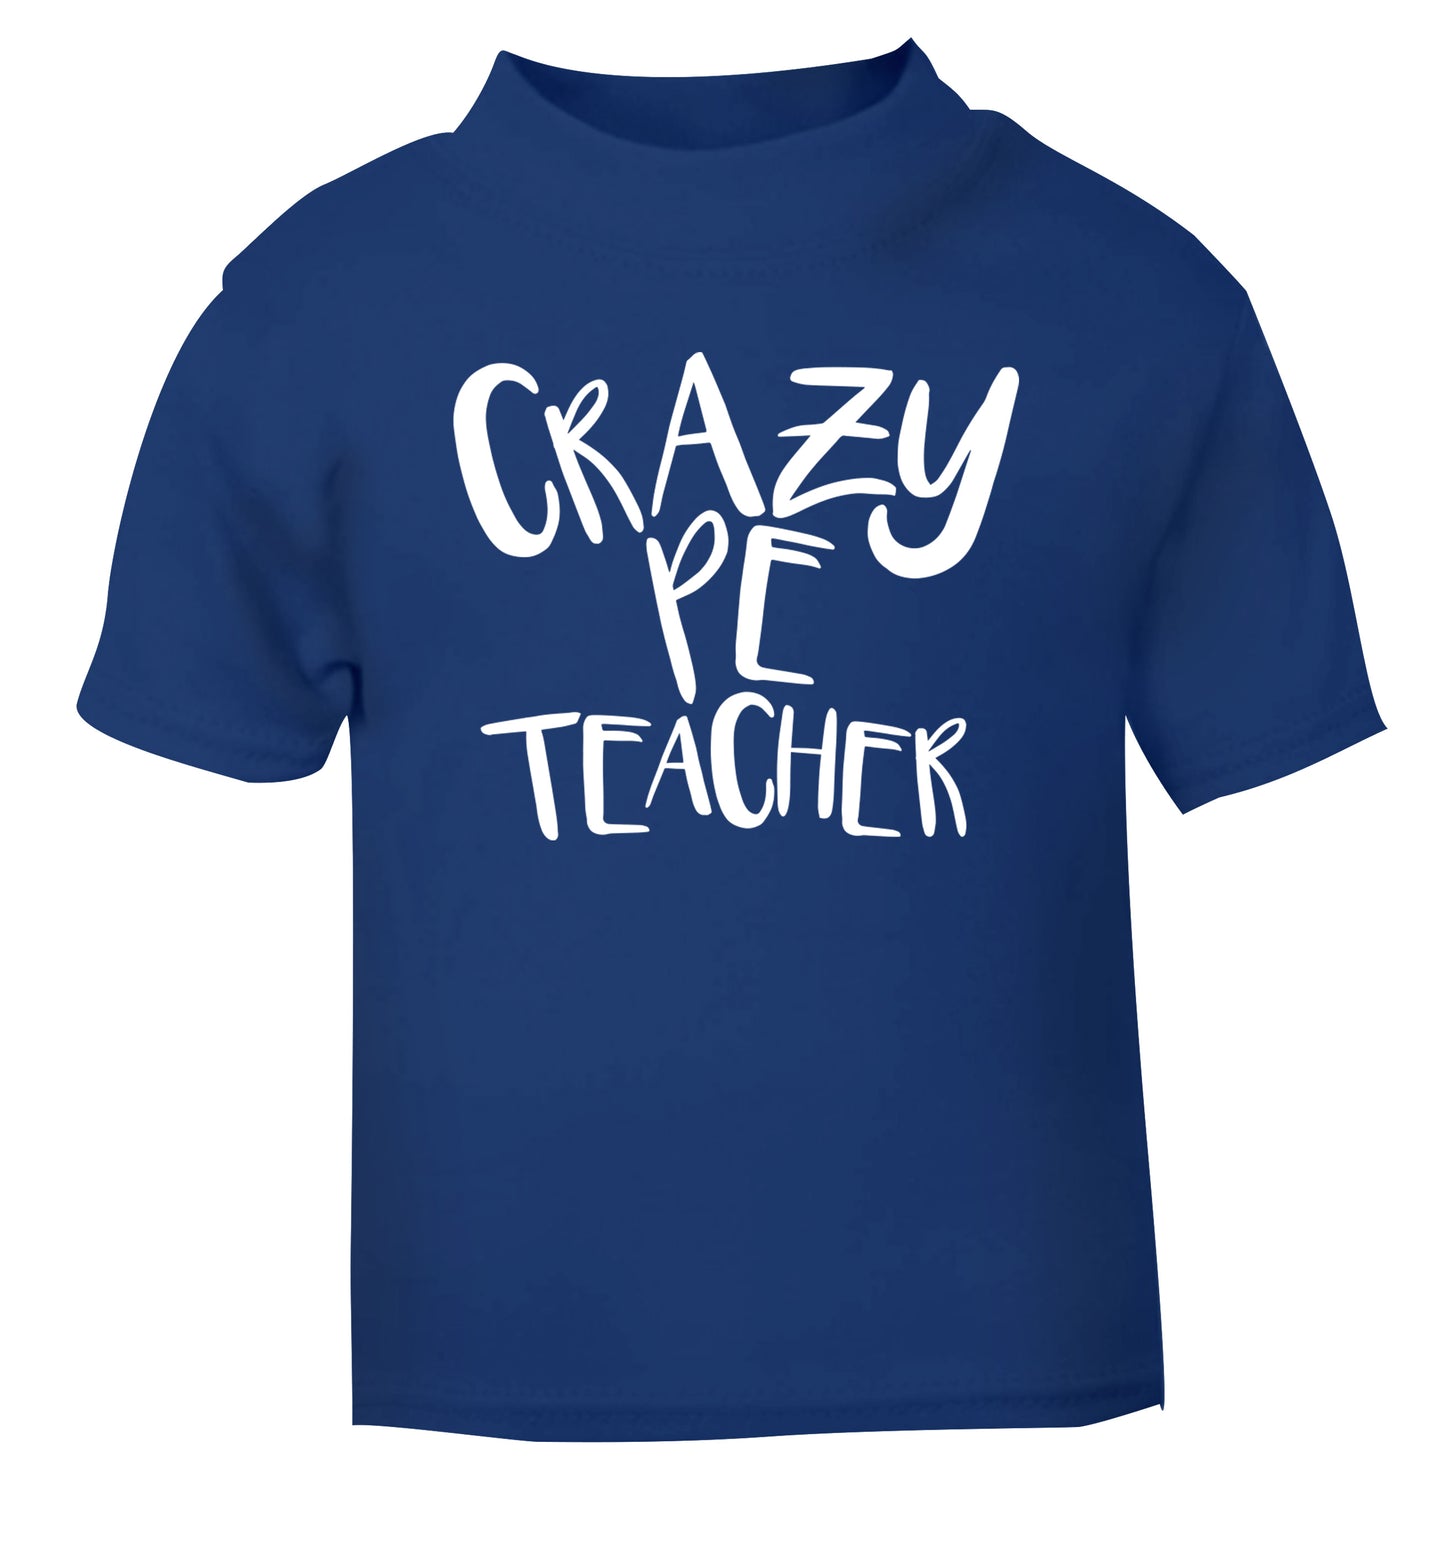 Crazy PE teacher blue Baby Toddler Tshirt 2 Years